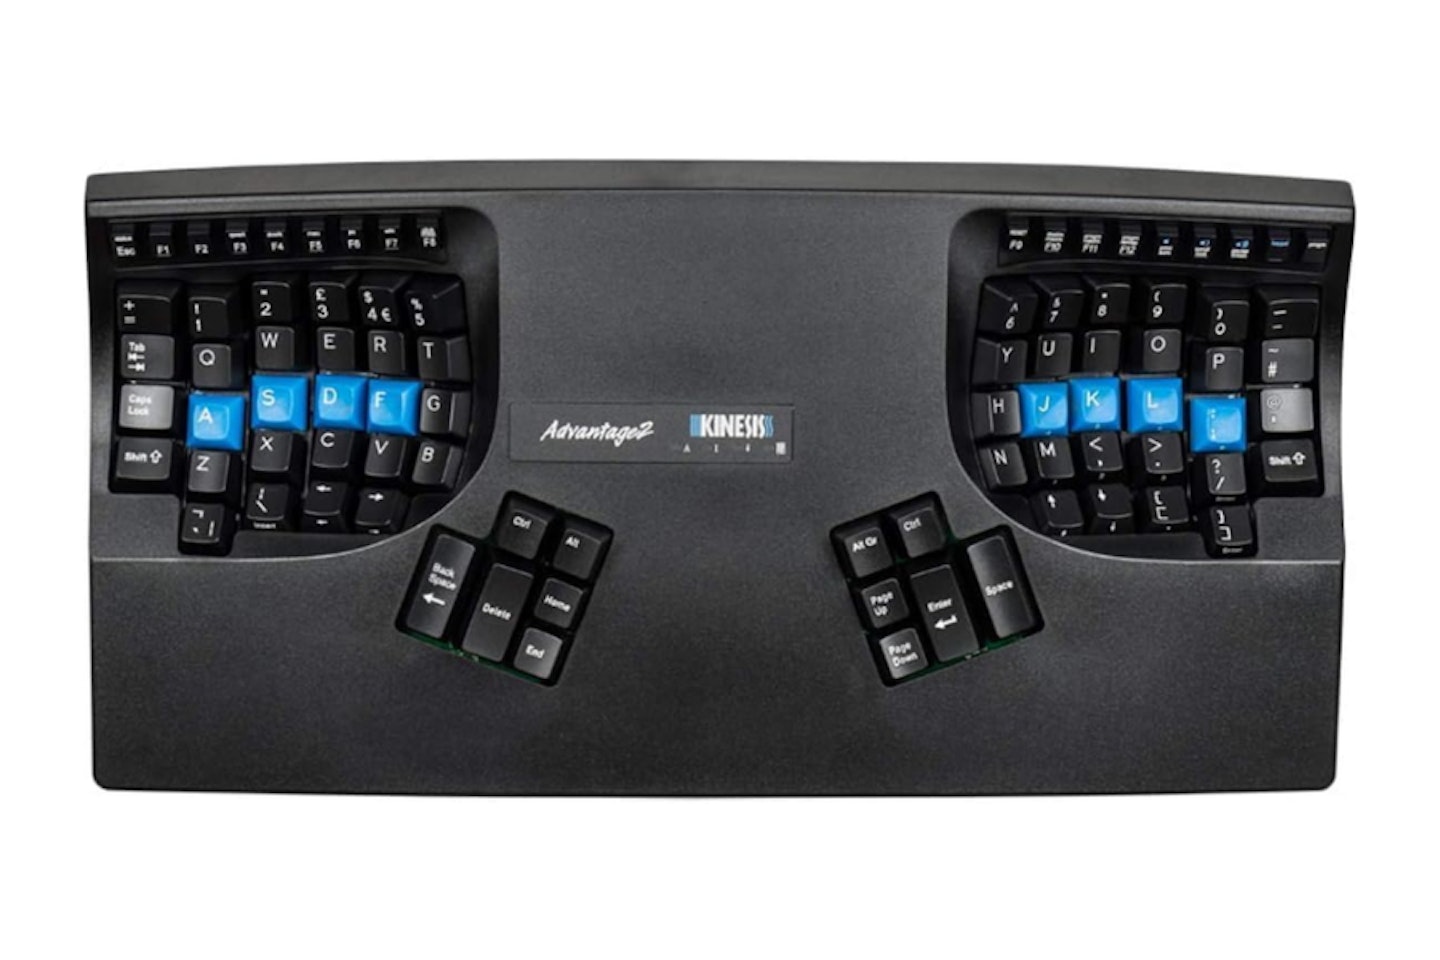 Kinesis Advantage2 - possibly the best ergonomic keyboard